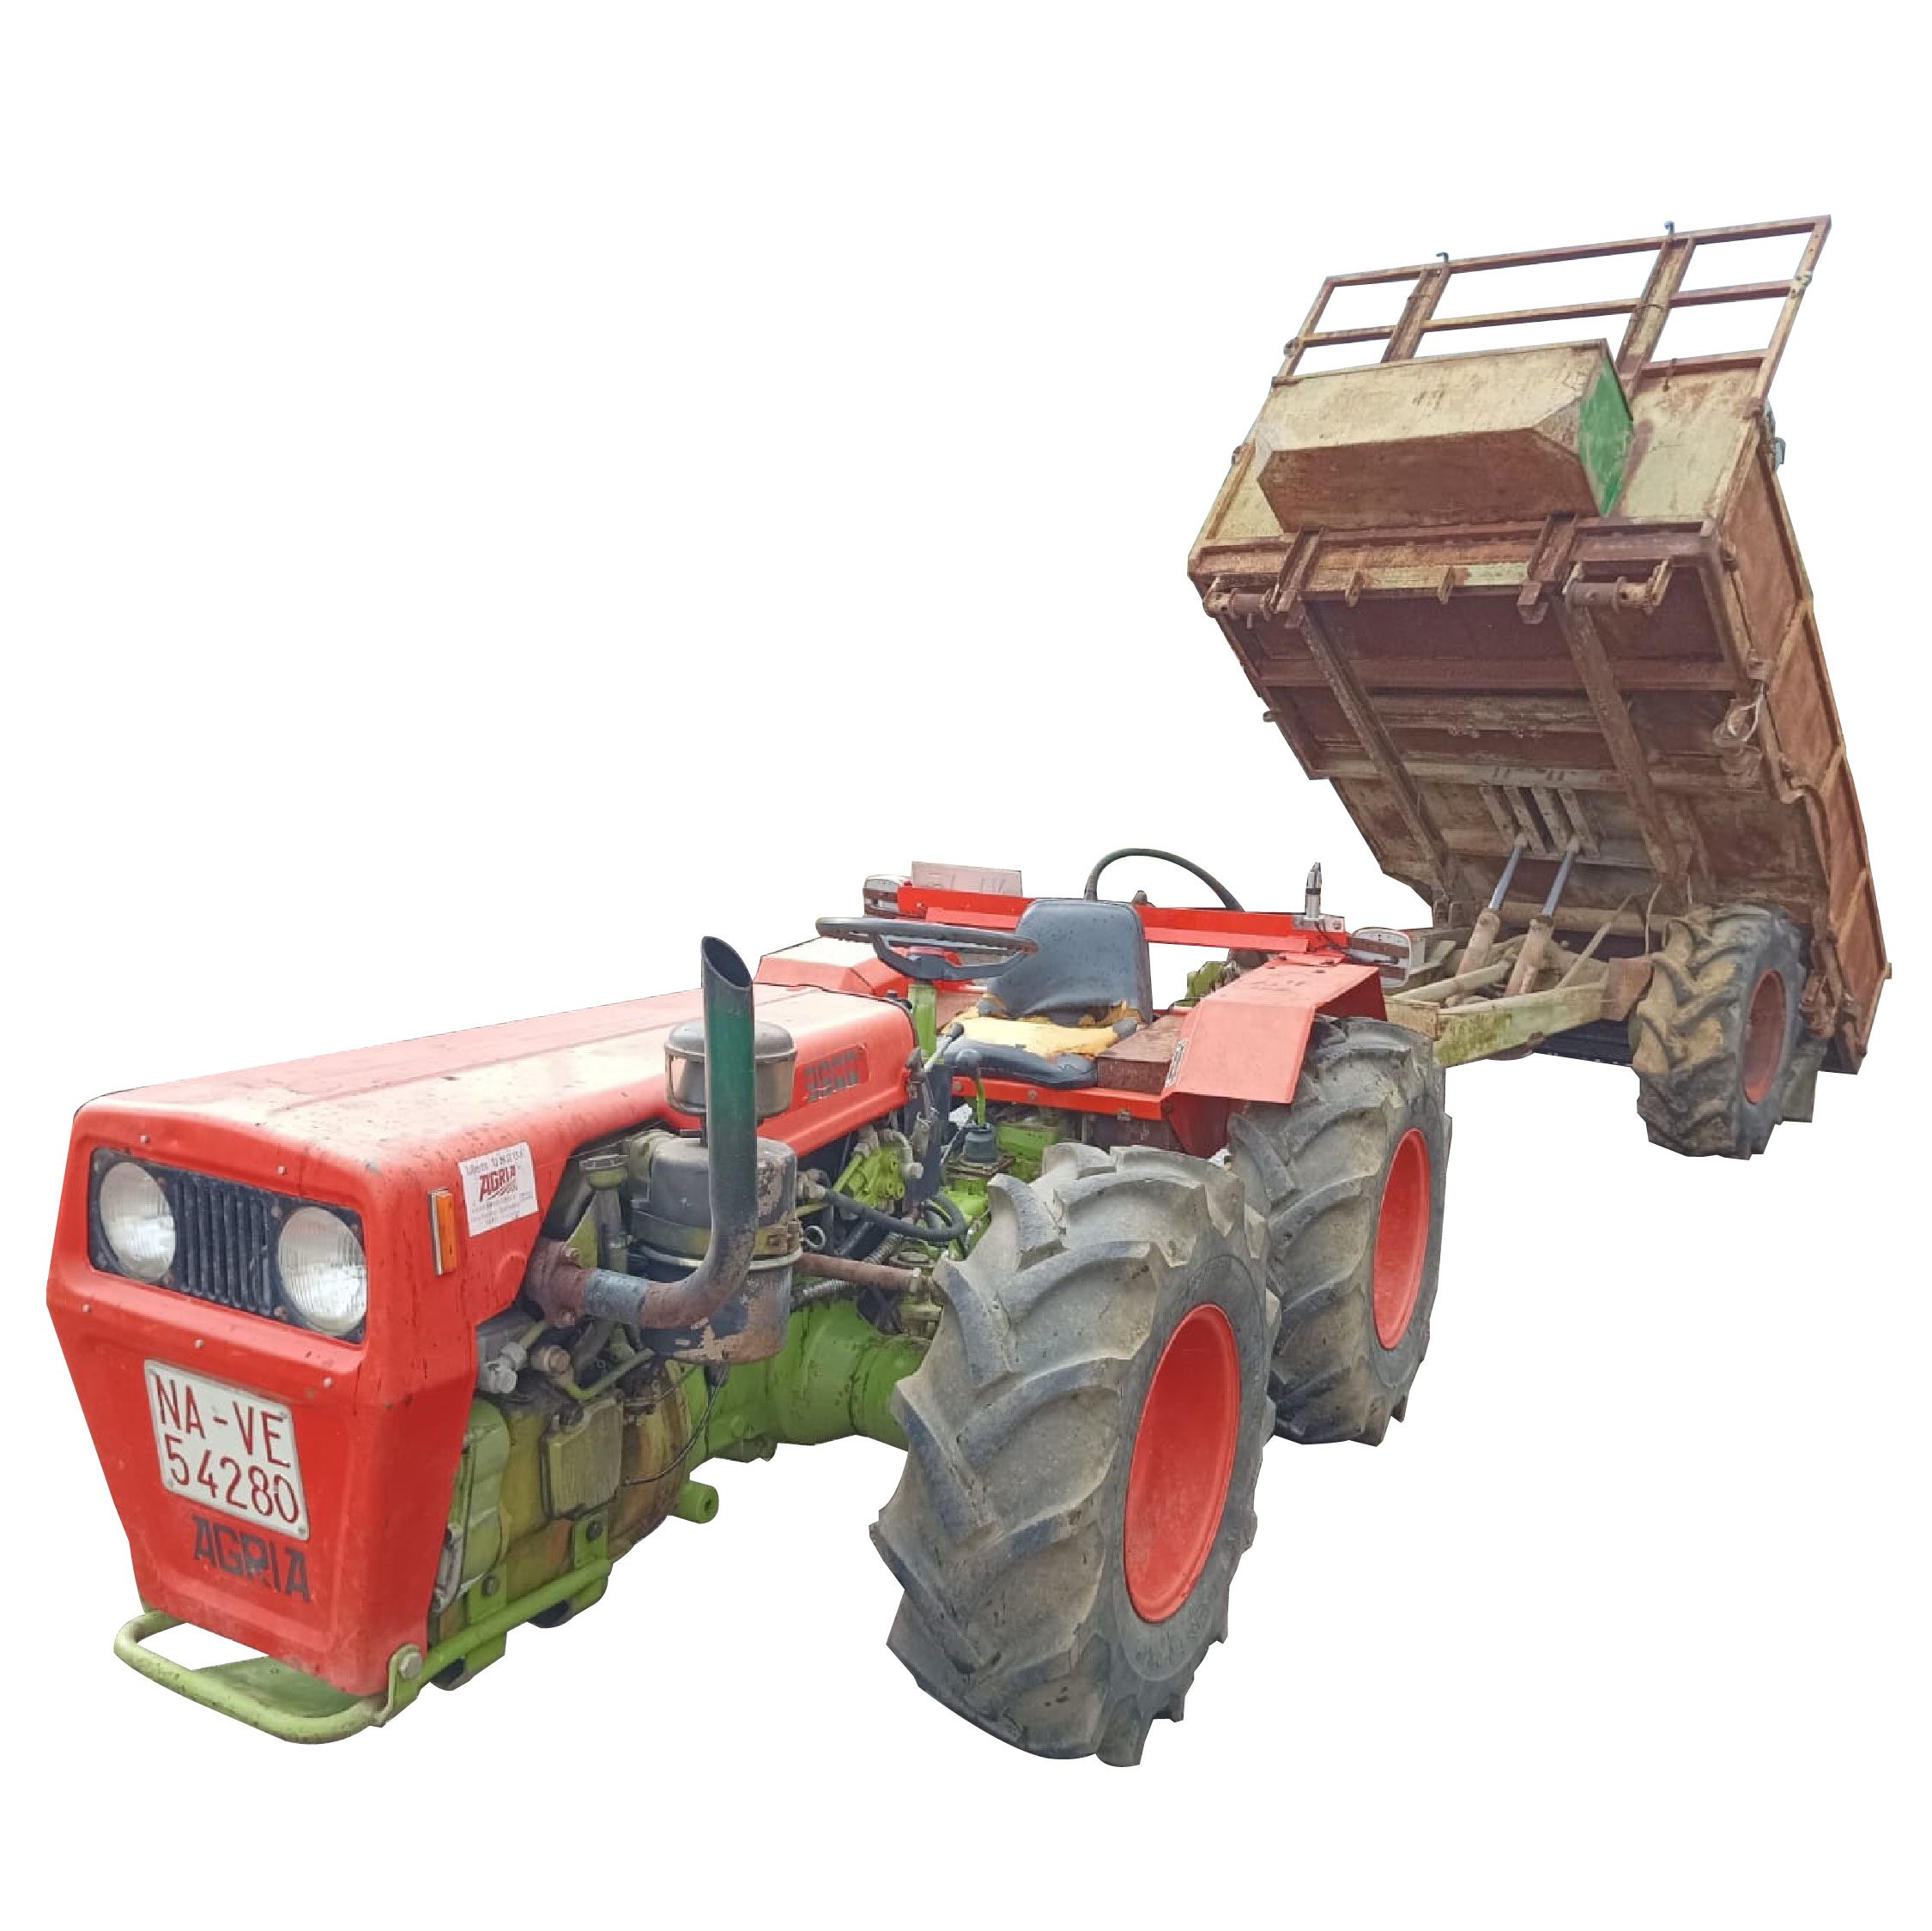 AGRIA 9900 con remolque y rotavator / 9000€